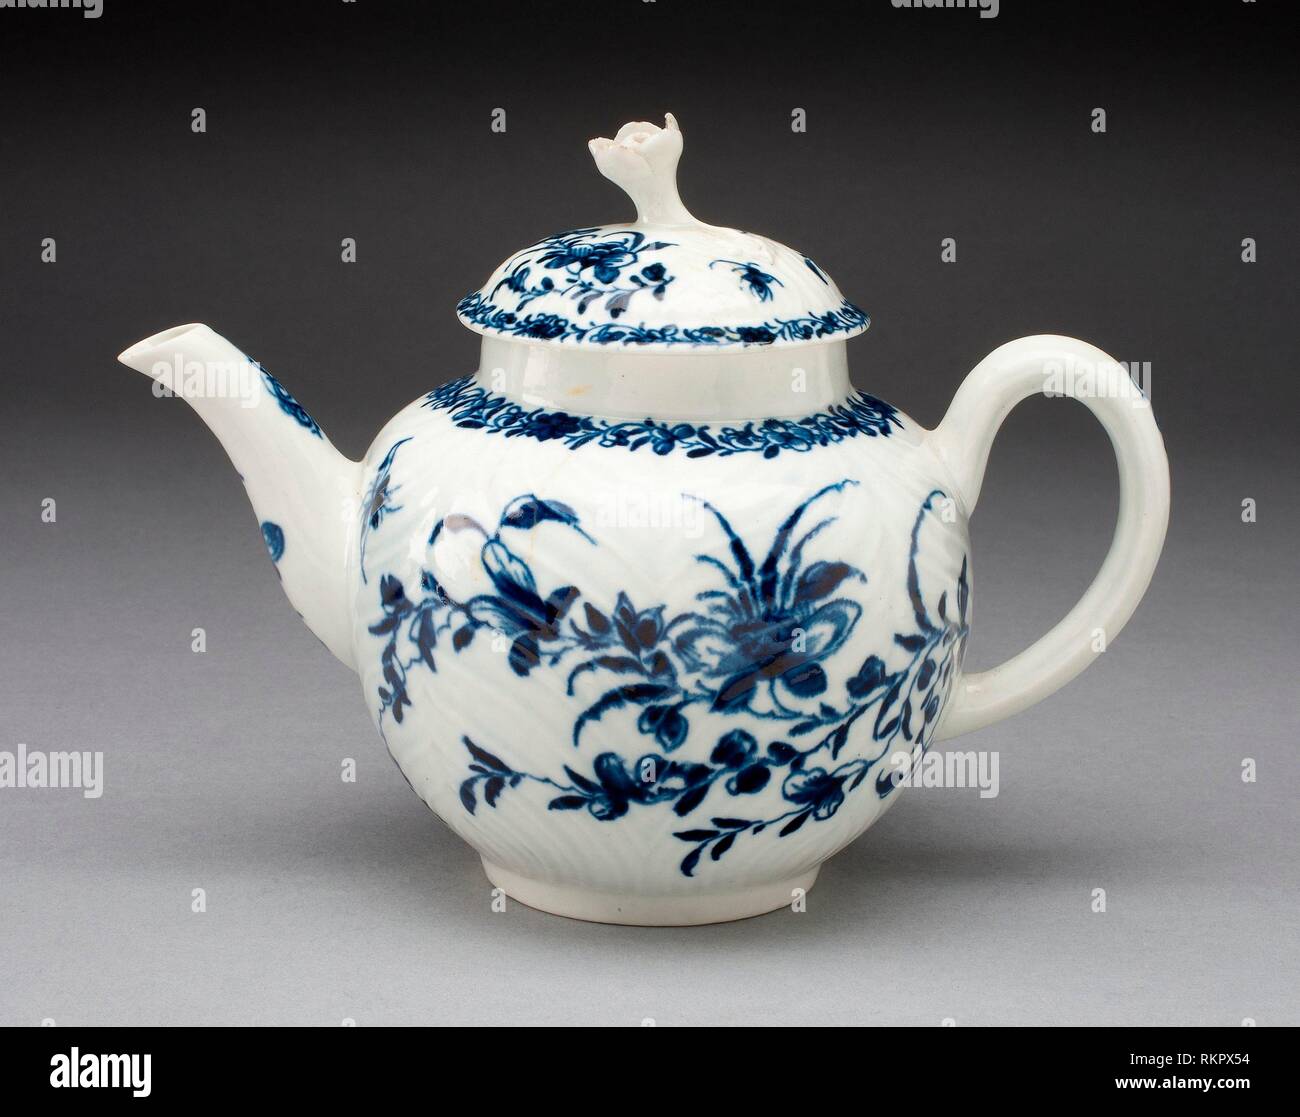 Tea Set - About 1760 - Worcester Porcelain Factory Worcester, England, founded 1751 - Artist: Worcester Royal Porcelain Company, Origin: Worcester, Stock Photo